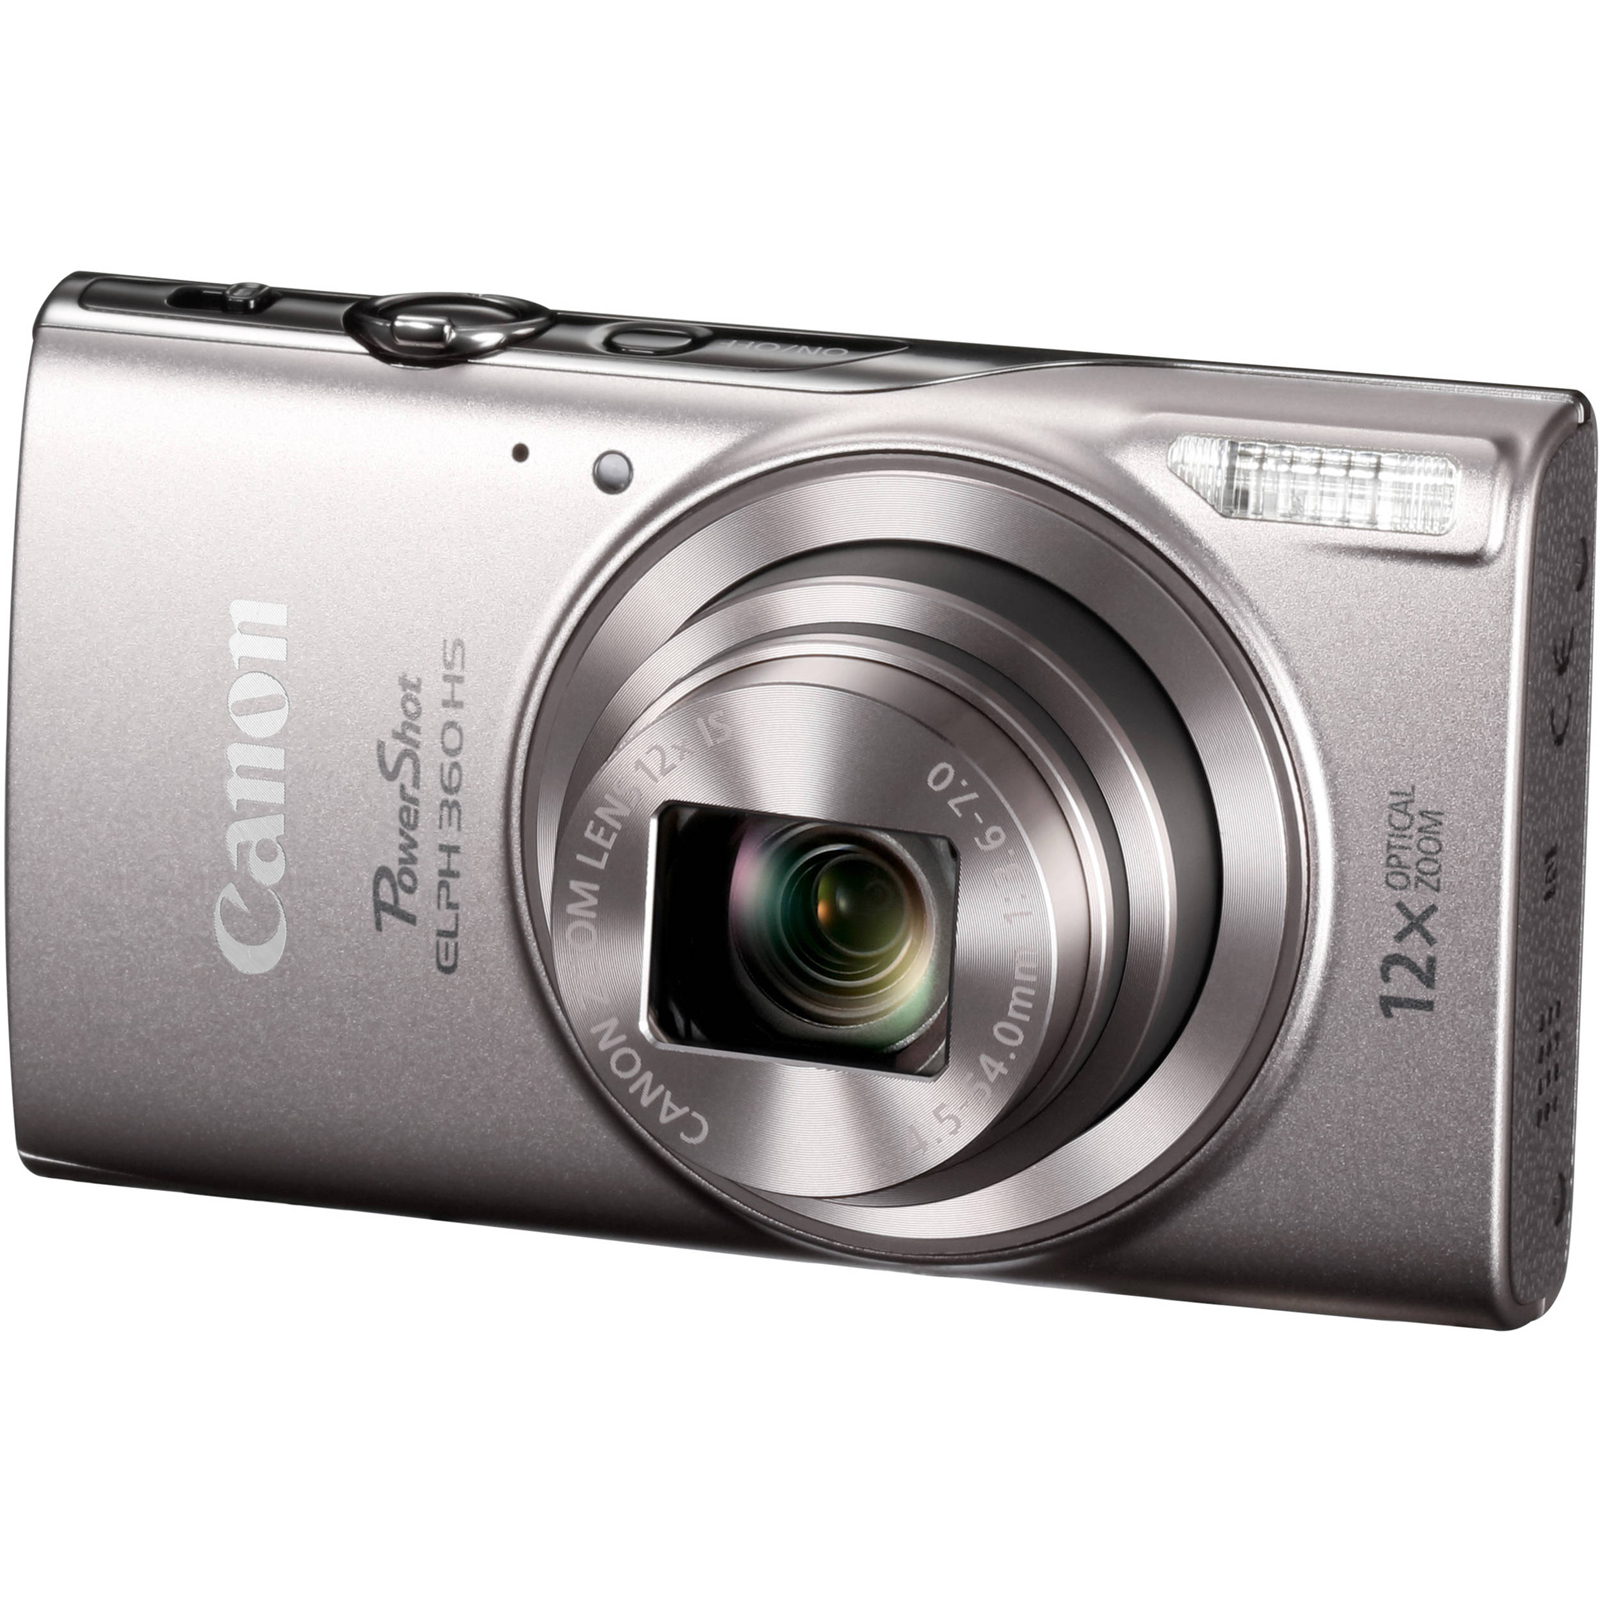 Canon PowerShot ELPH 360 HS Digital Camera (Silver) - image 1 of 4